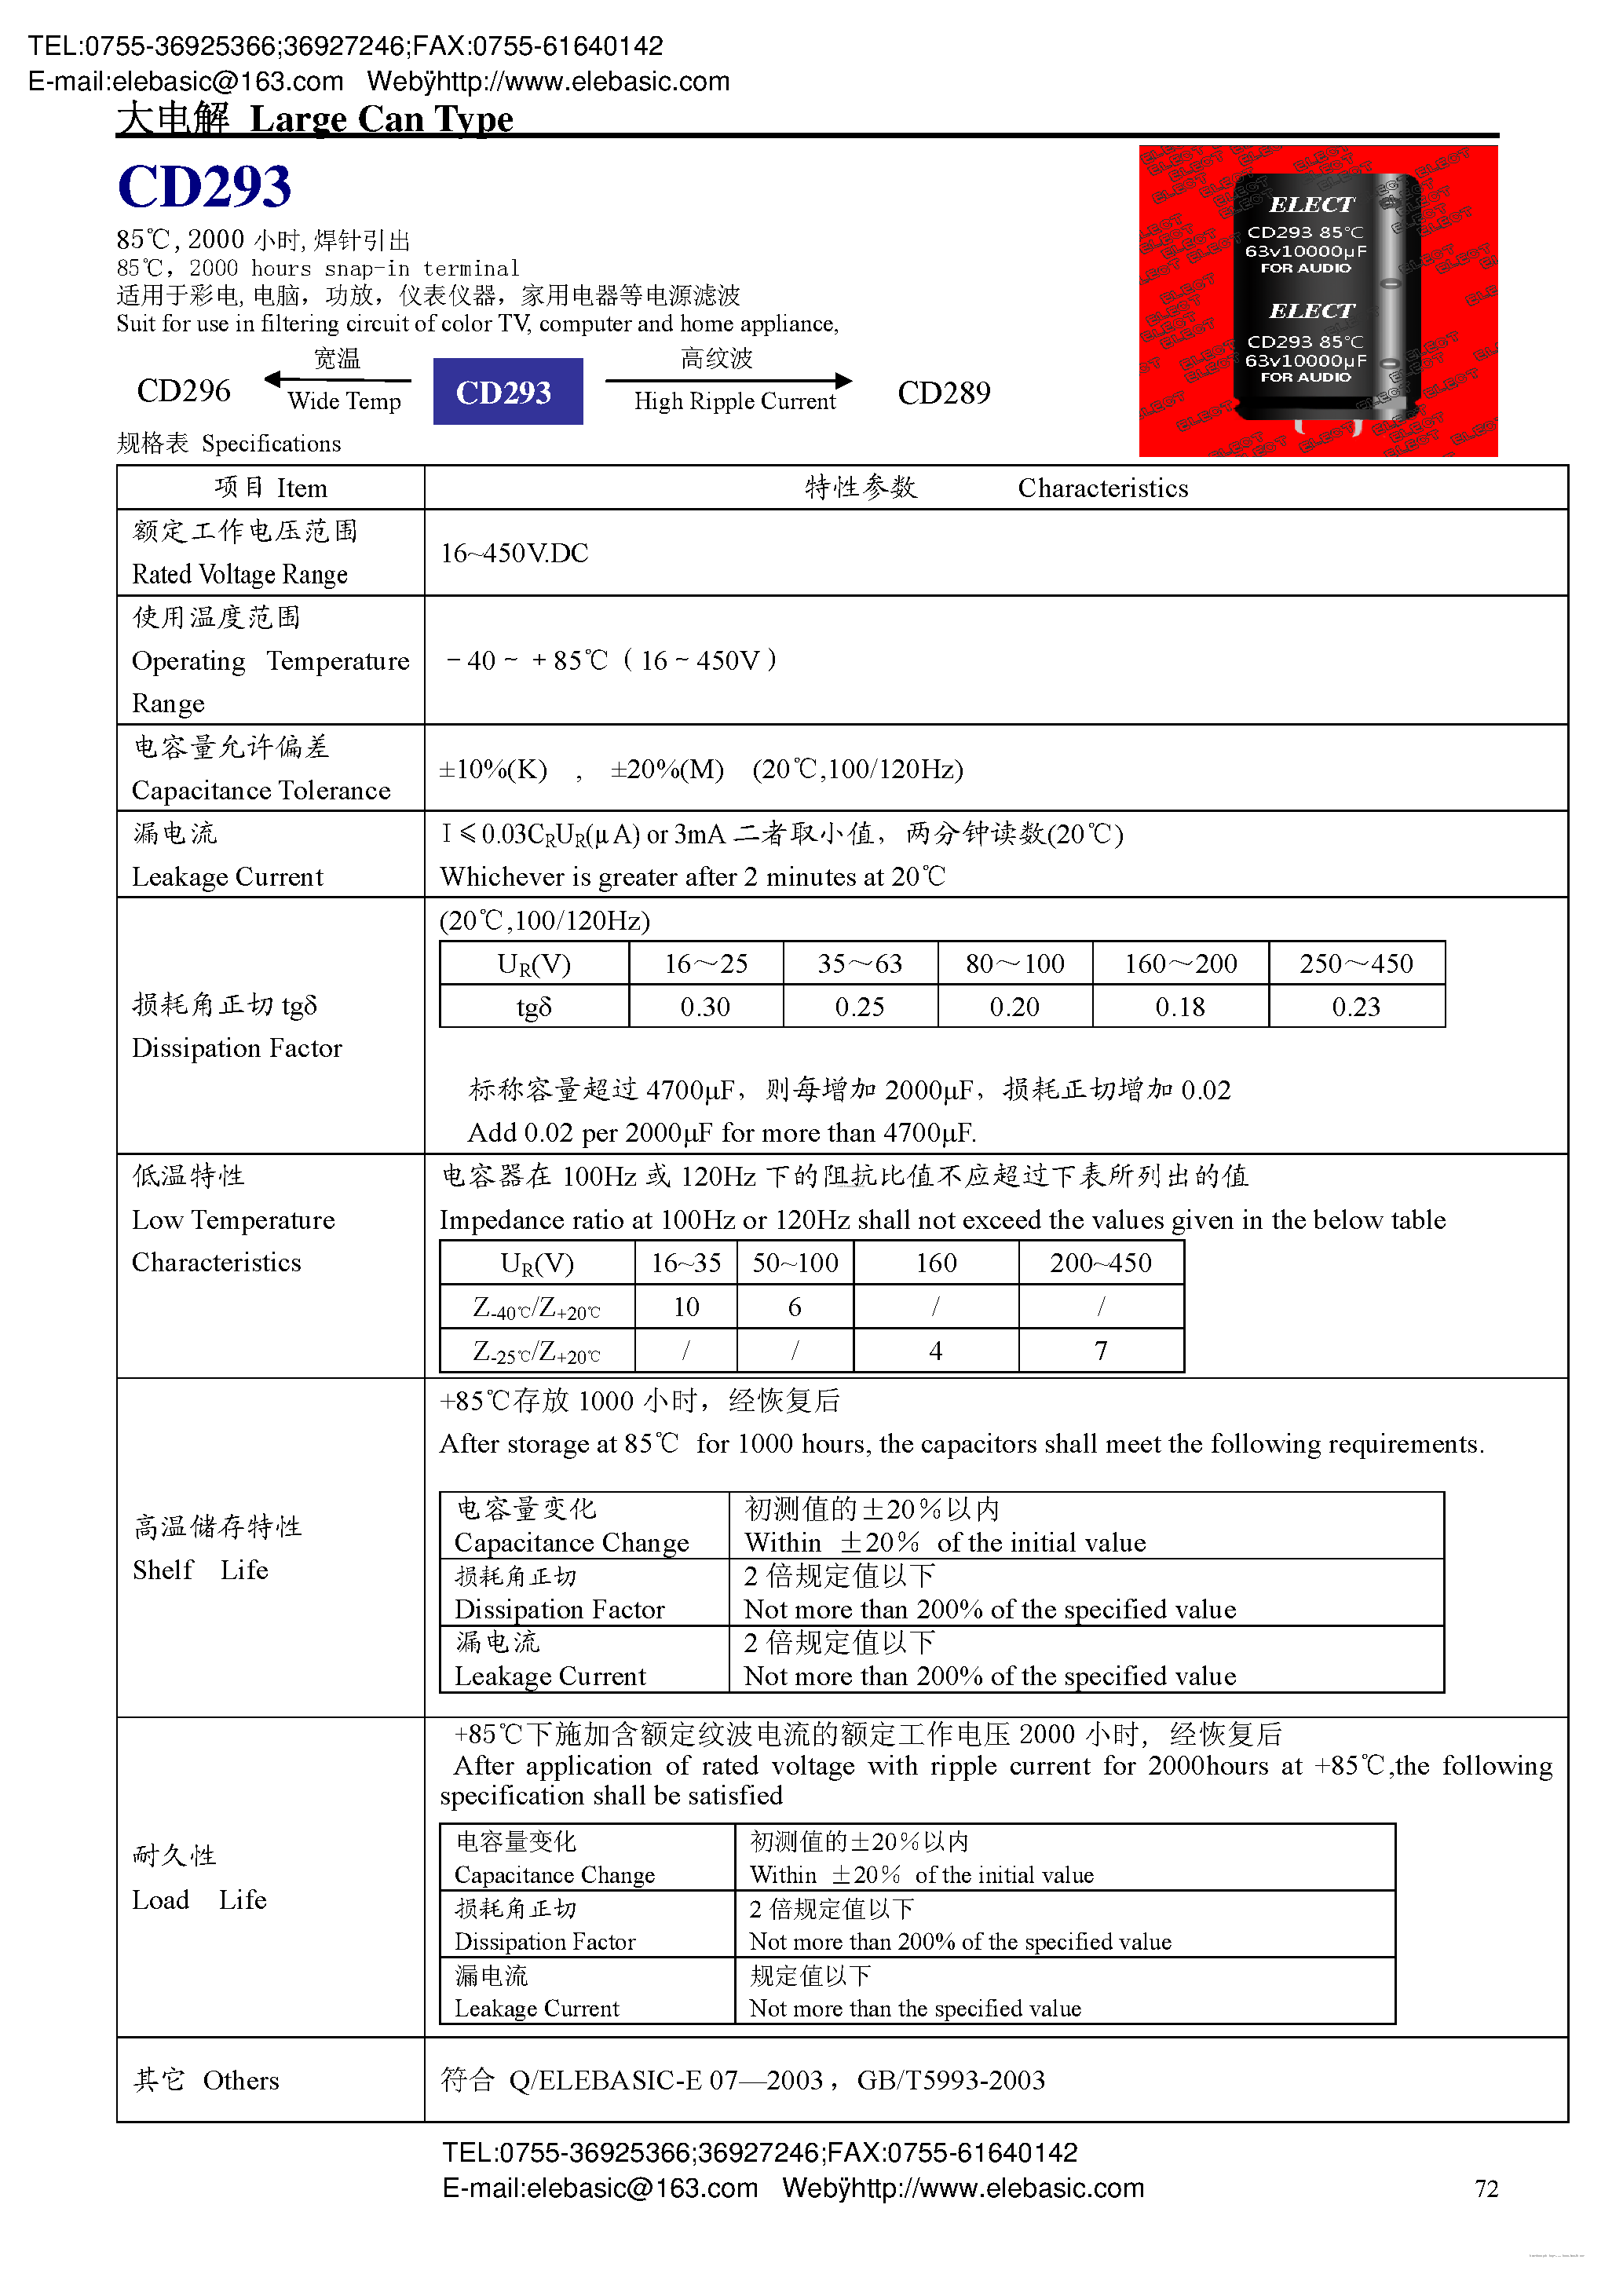 Datasheet CD293 - Aluminum Electrolytic Capacitor page 1